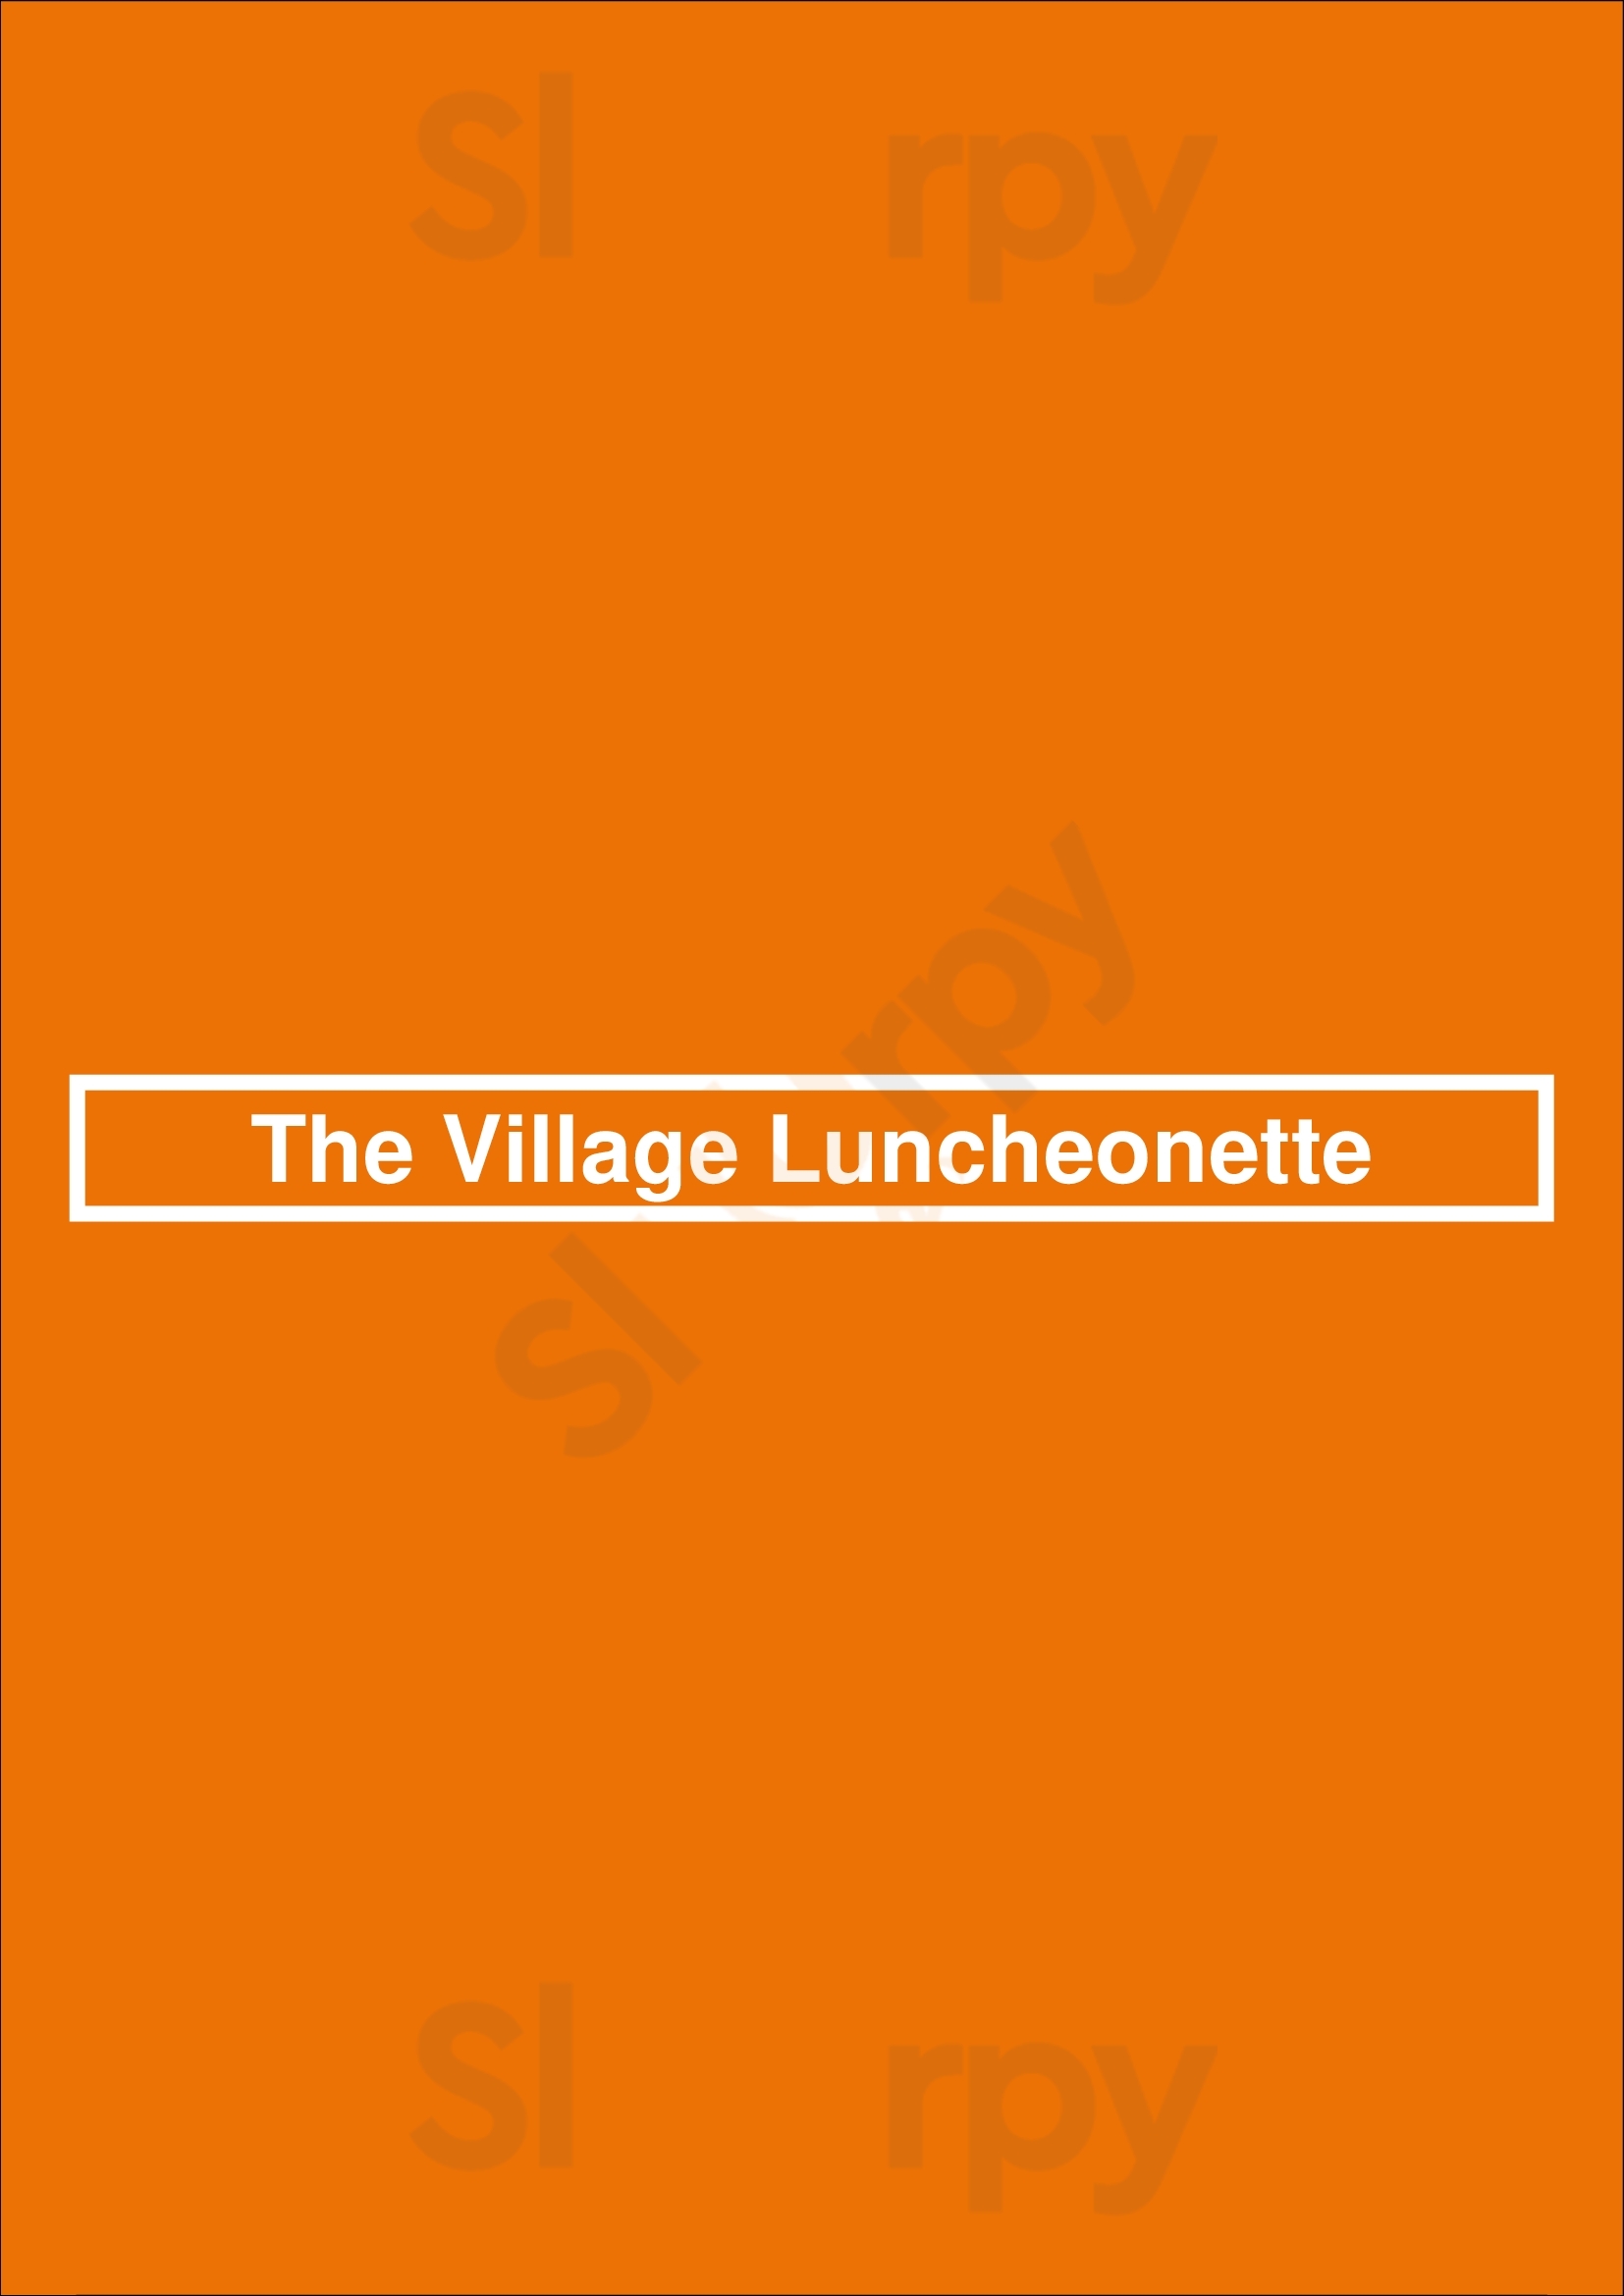 The Village Luncheonette Brooklyn Menu - 1